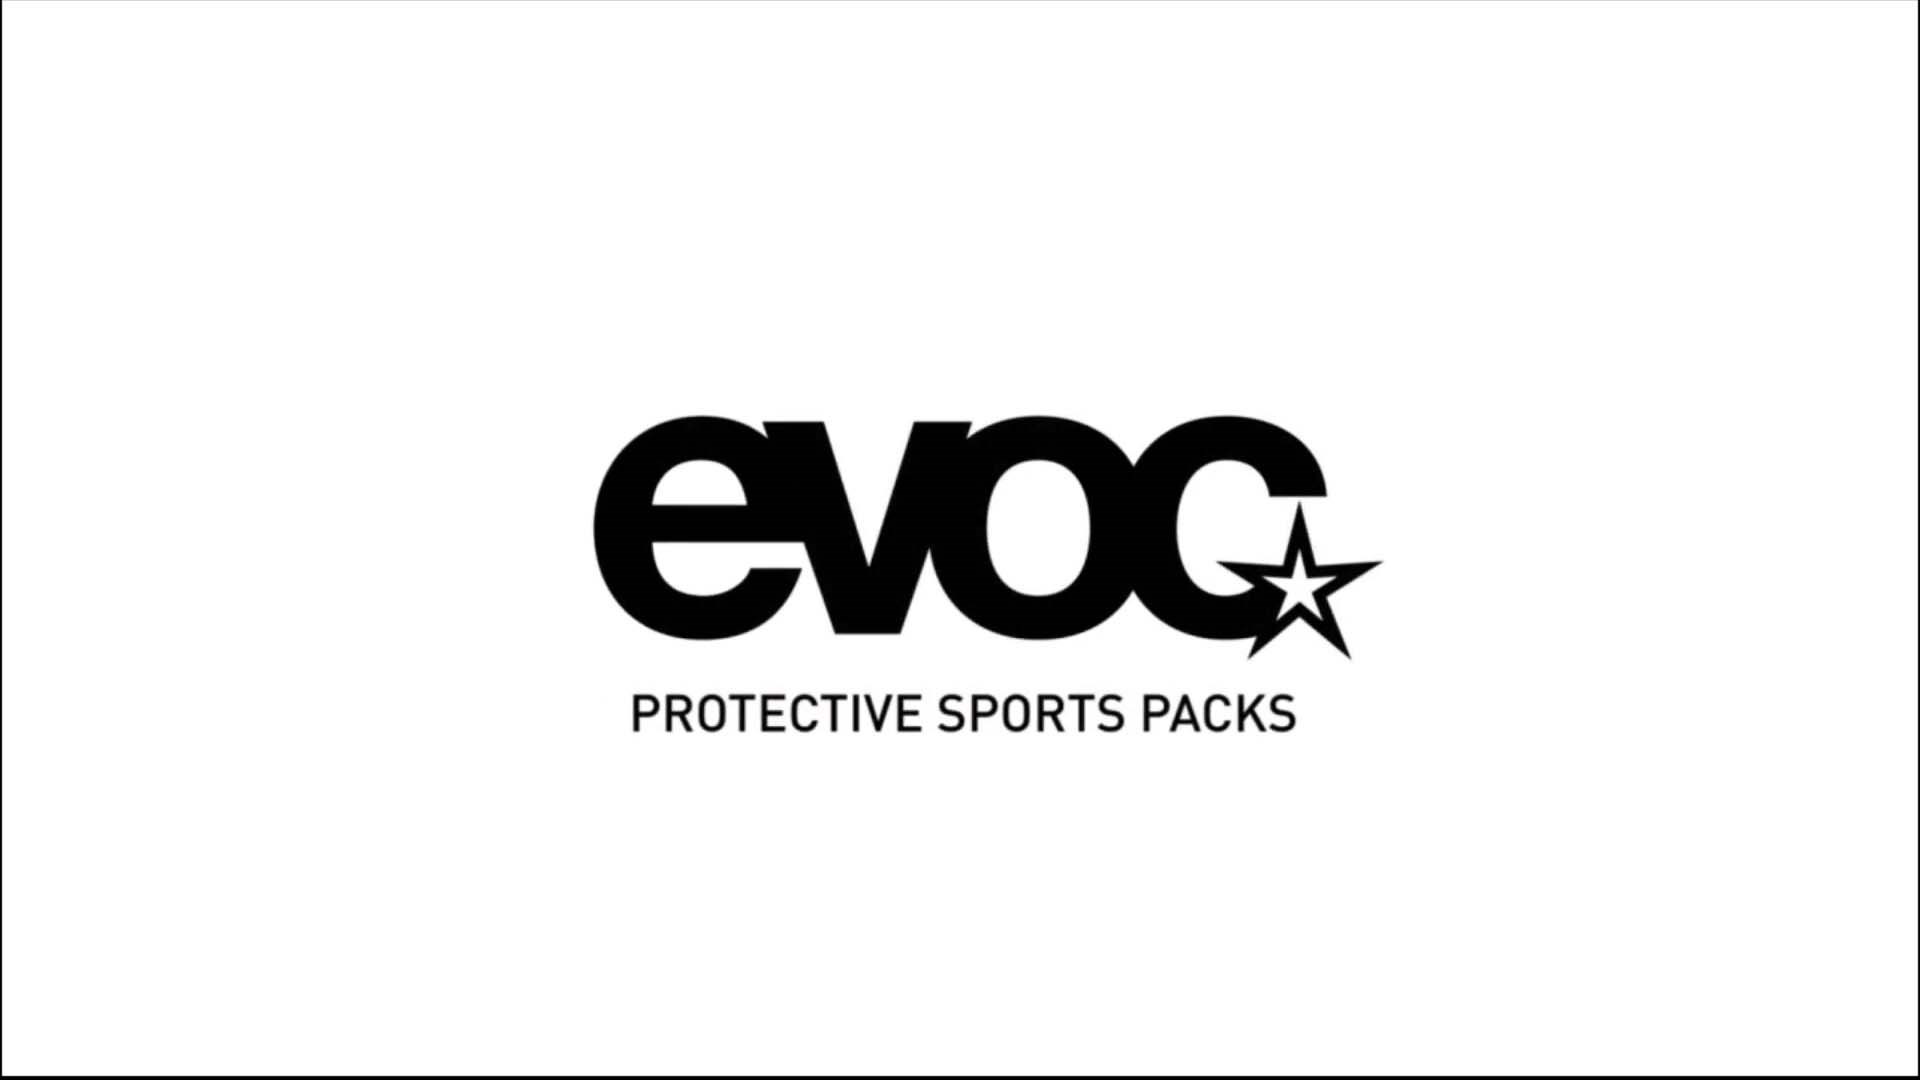 EVOC Bike Travel Bag XL